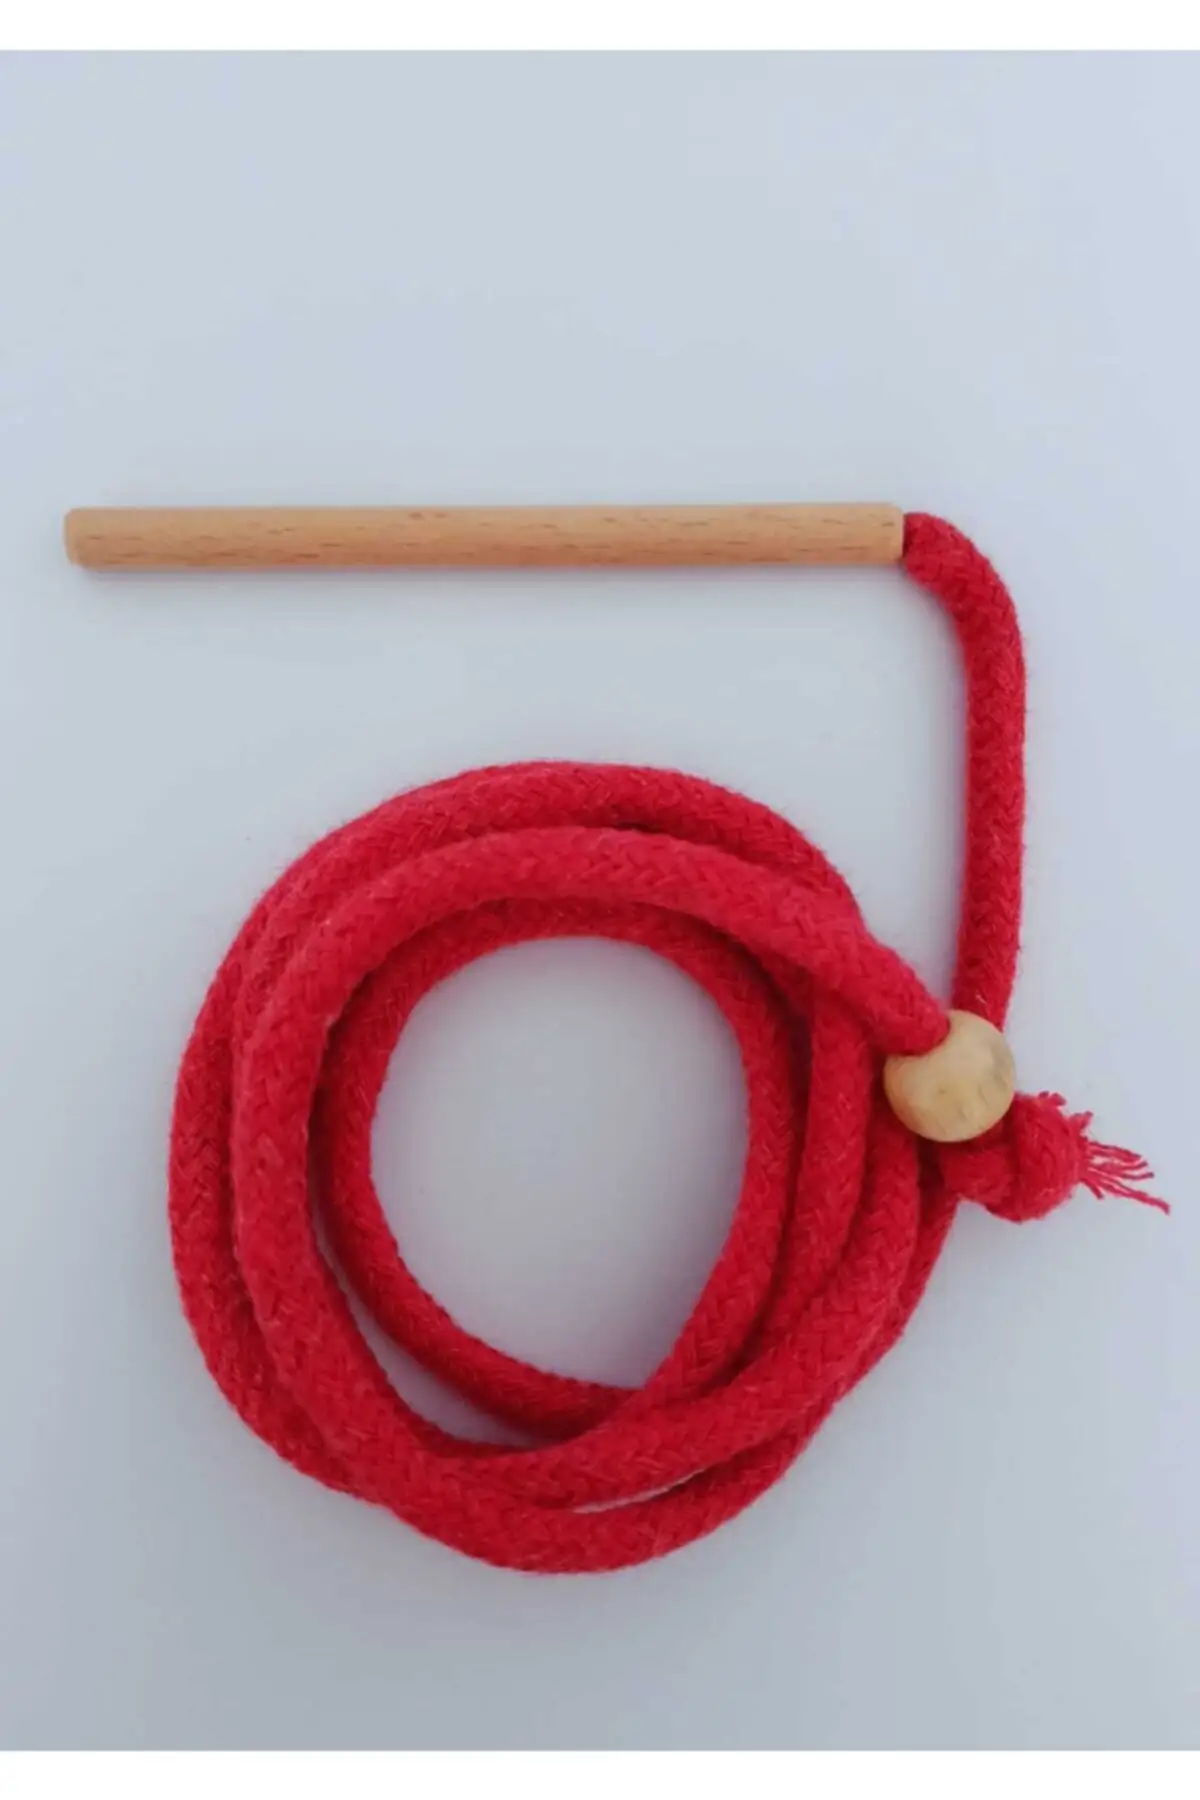 Boncuklu – jeu de WATE Ip Montessori, corde rouge